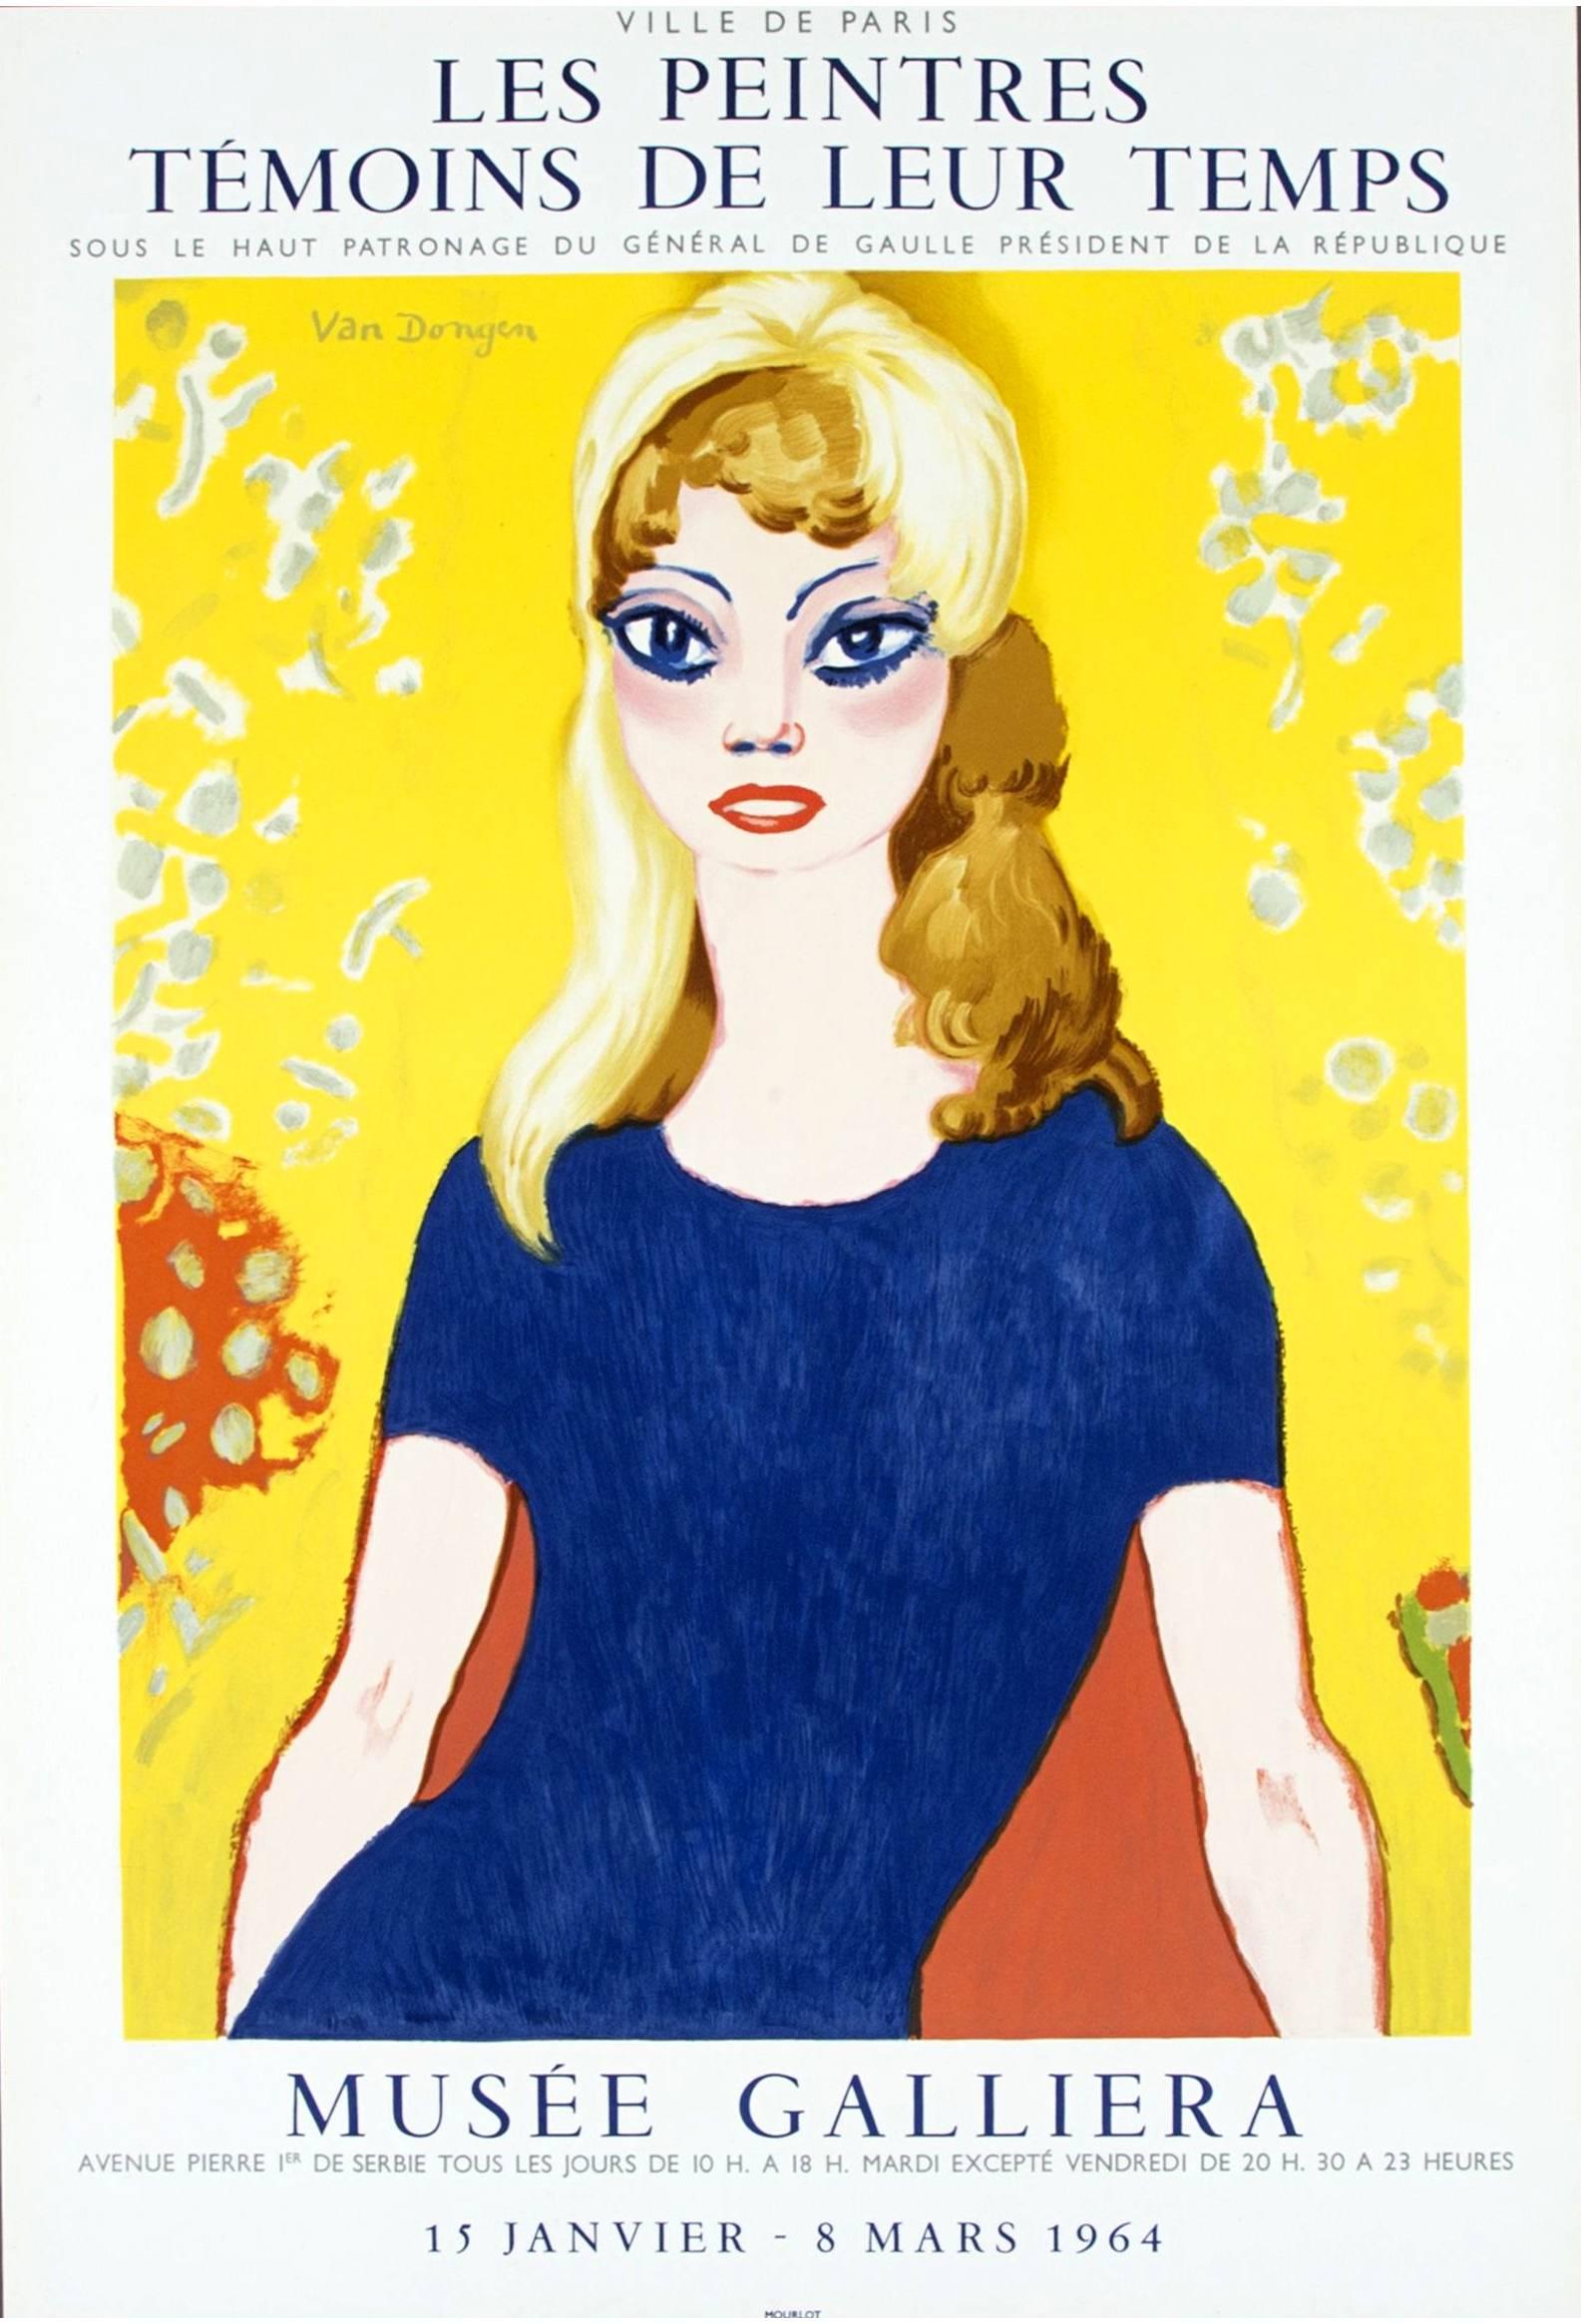 (After) Kees van Dongen Portrait Print - Brigitte Bardot - Exhibition Poster